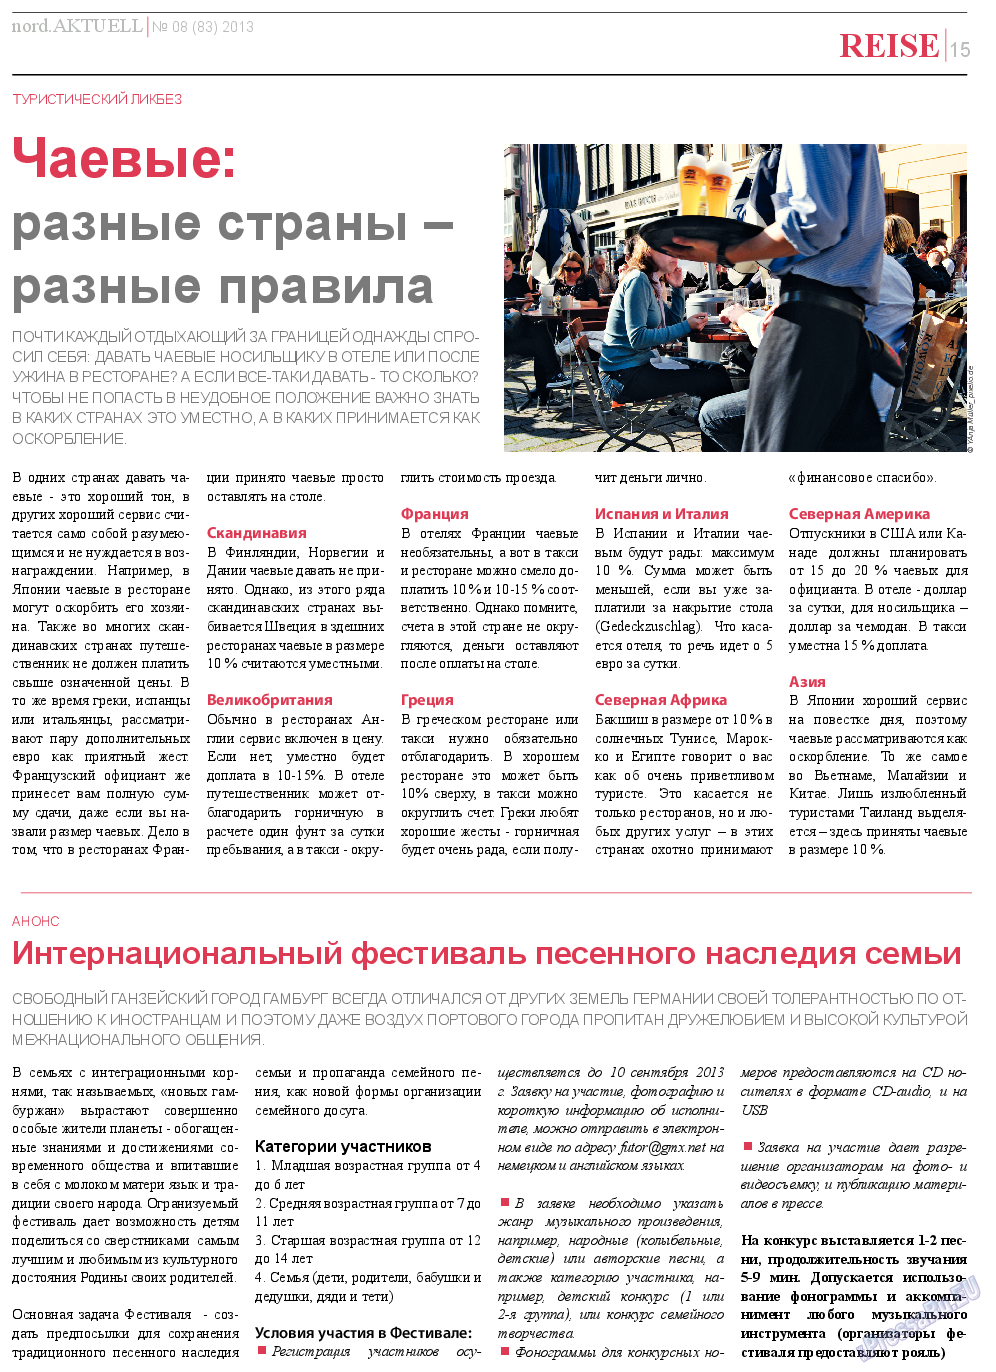 nord.Aktuell, газета. 2013 №8 стр.15